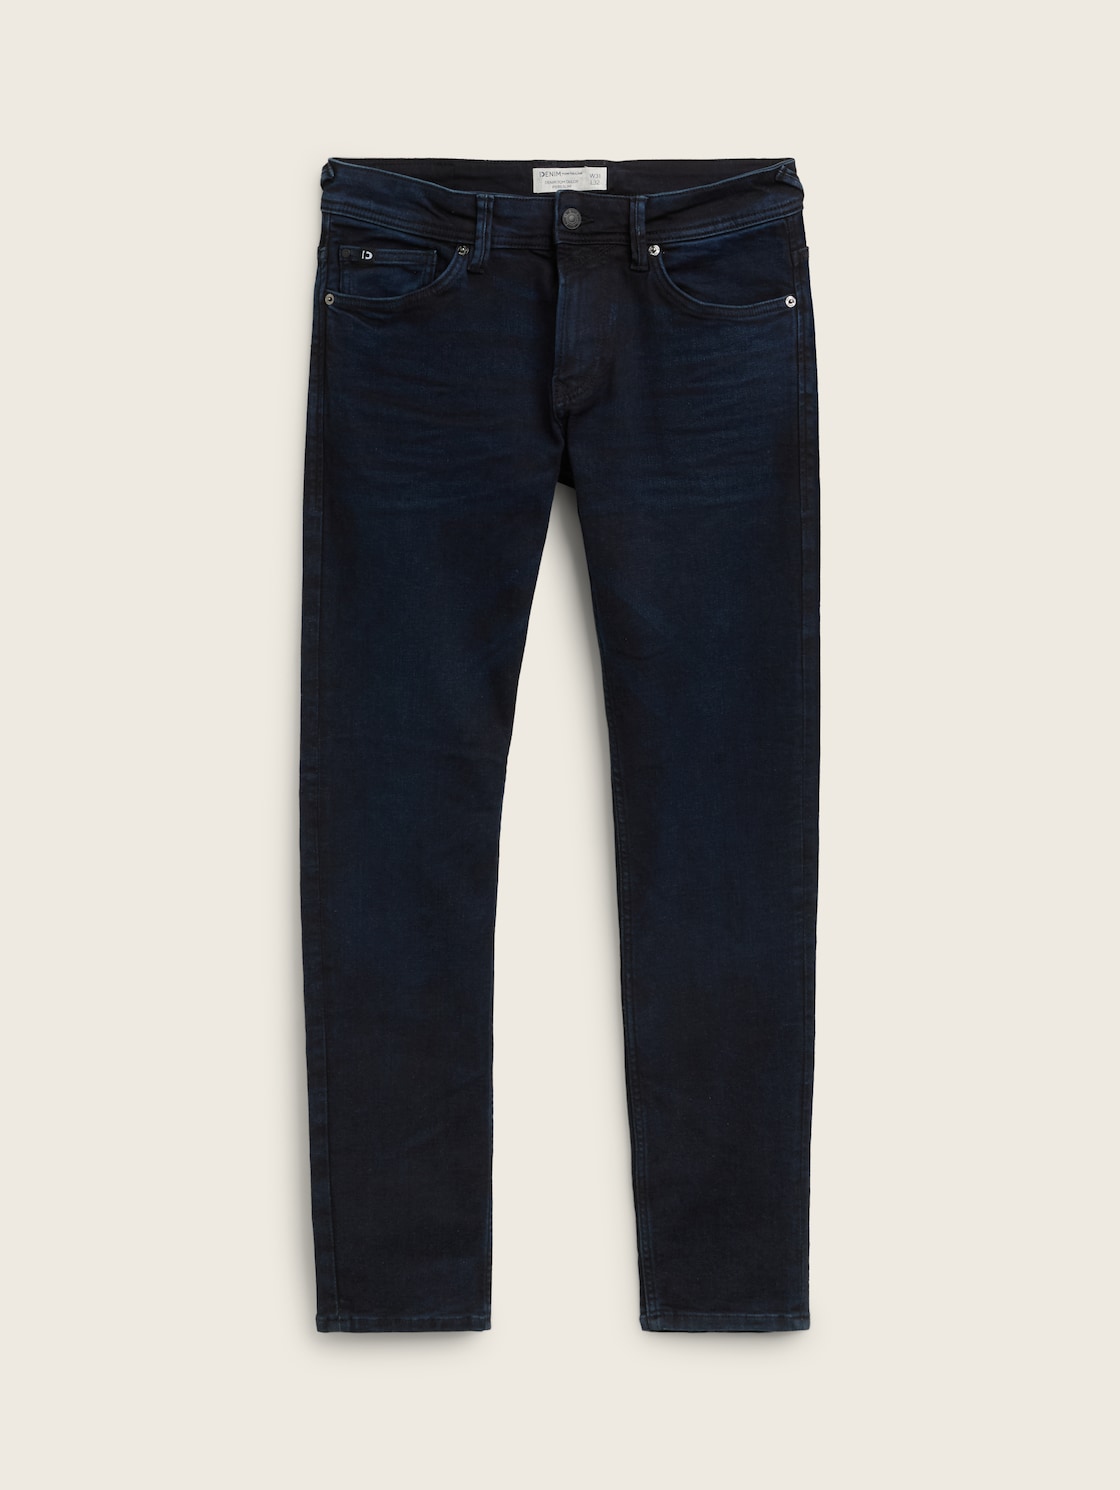 TOM TAILOR DENIM Herren Piers Slim Jeans, blau, Uni, Gr. 34/32 von Tom Tailor Denim